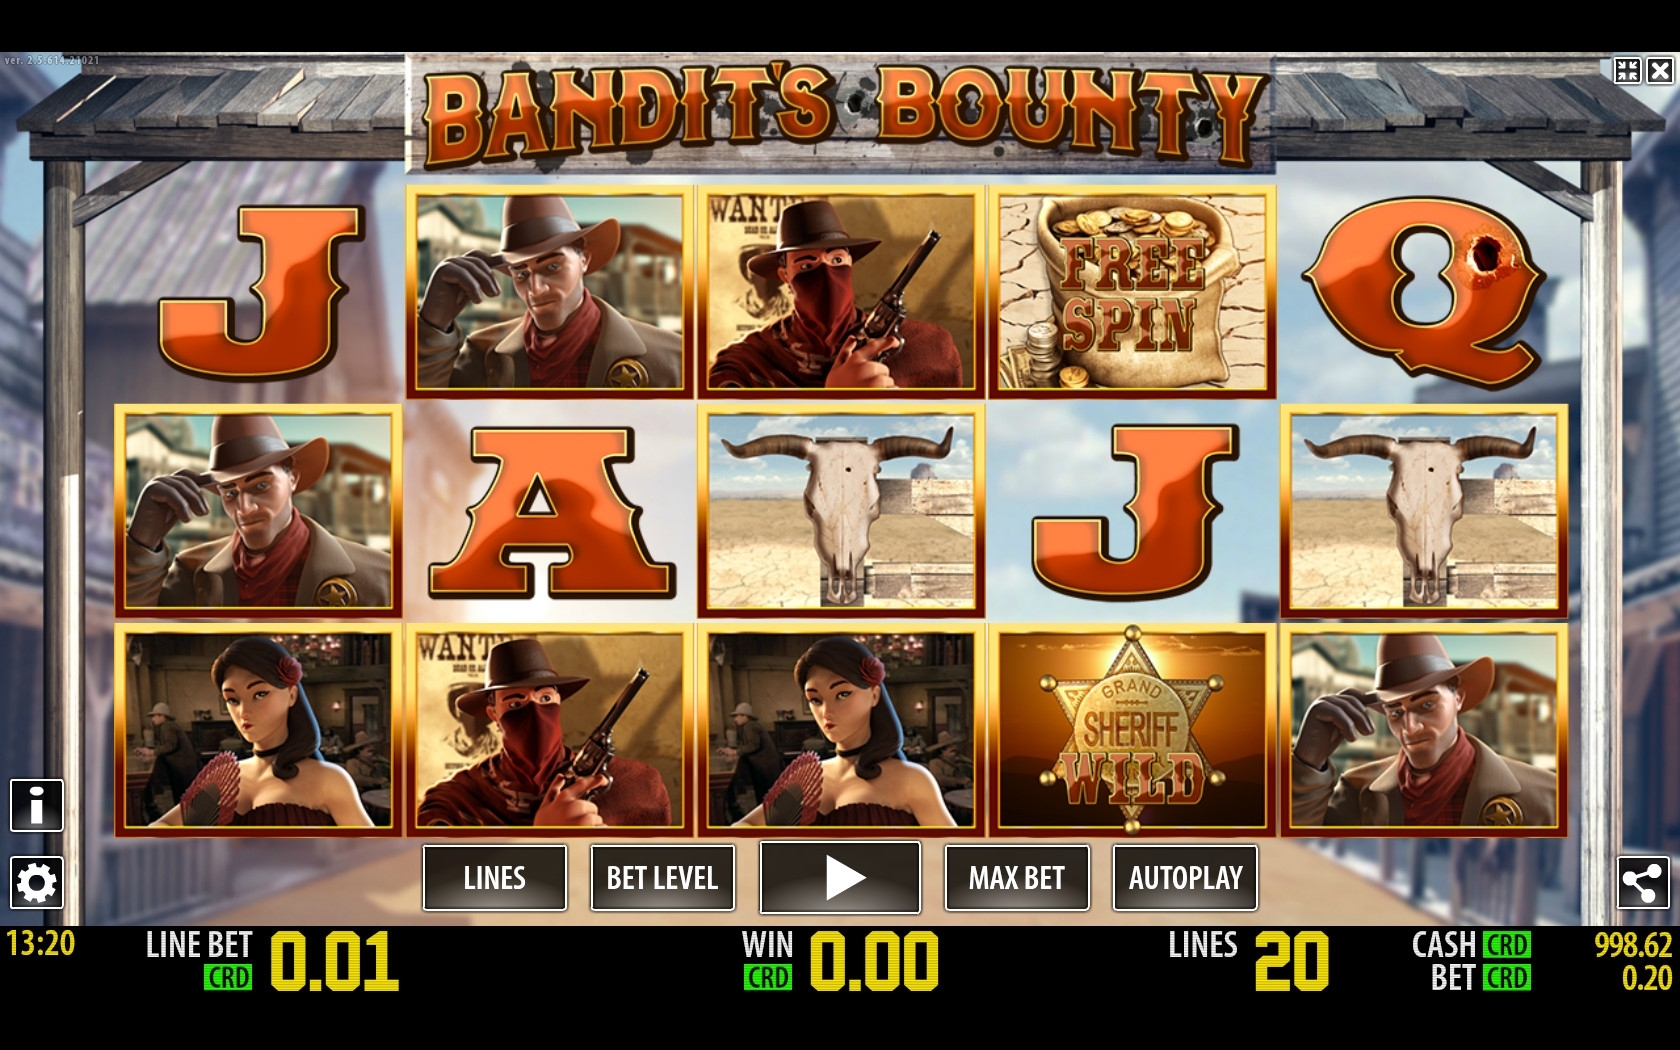 Bandit’s Bounty (Bandit’s Bounty) from category Slots